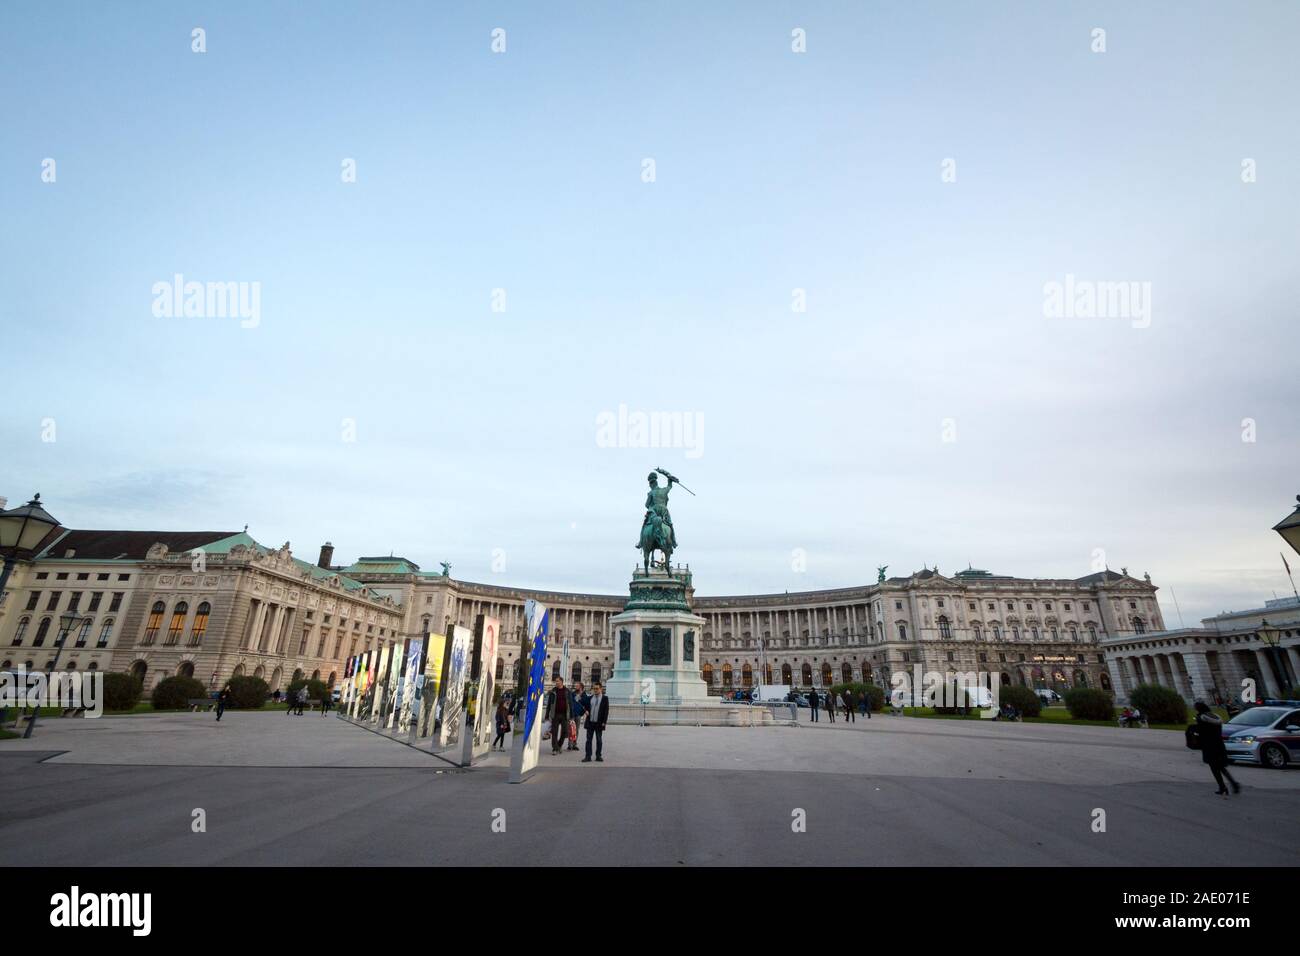 VIENNA, AUSTRIA - NOVEMBER 6, 2019: Hofburg palace, on its Neue Burg aisle, taken from the Heldenplatz square, with the 19th century Prinz Eugen statu Stock Photo